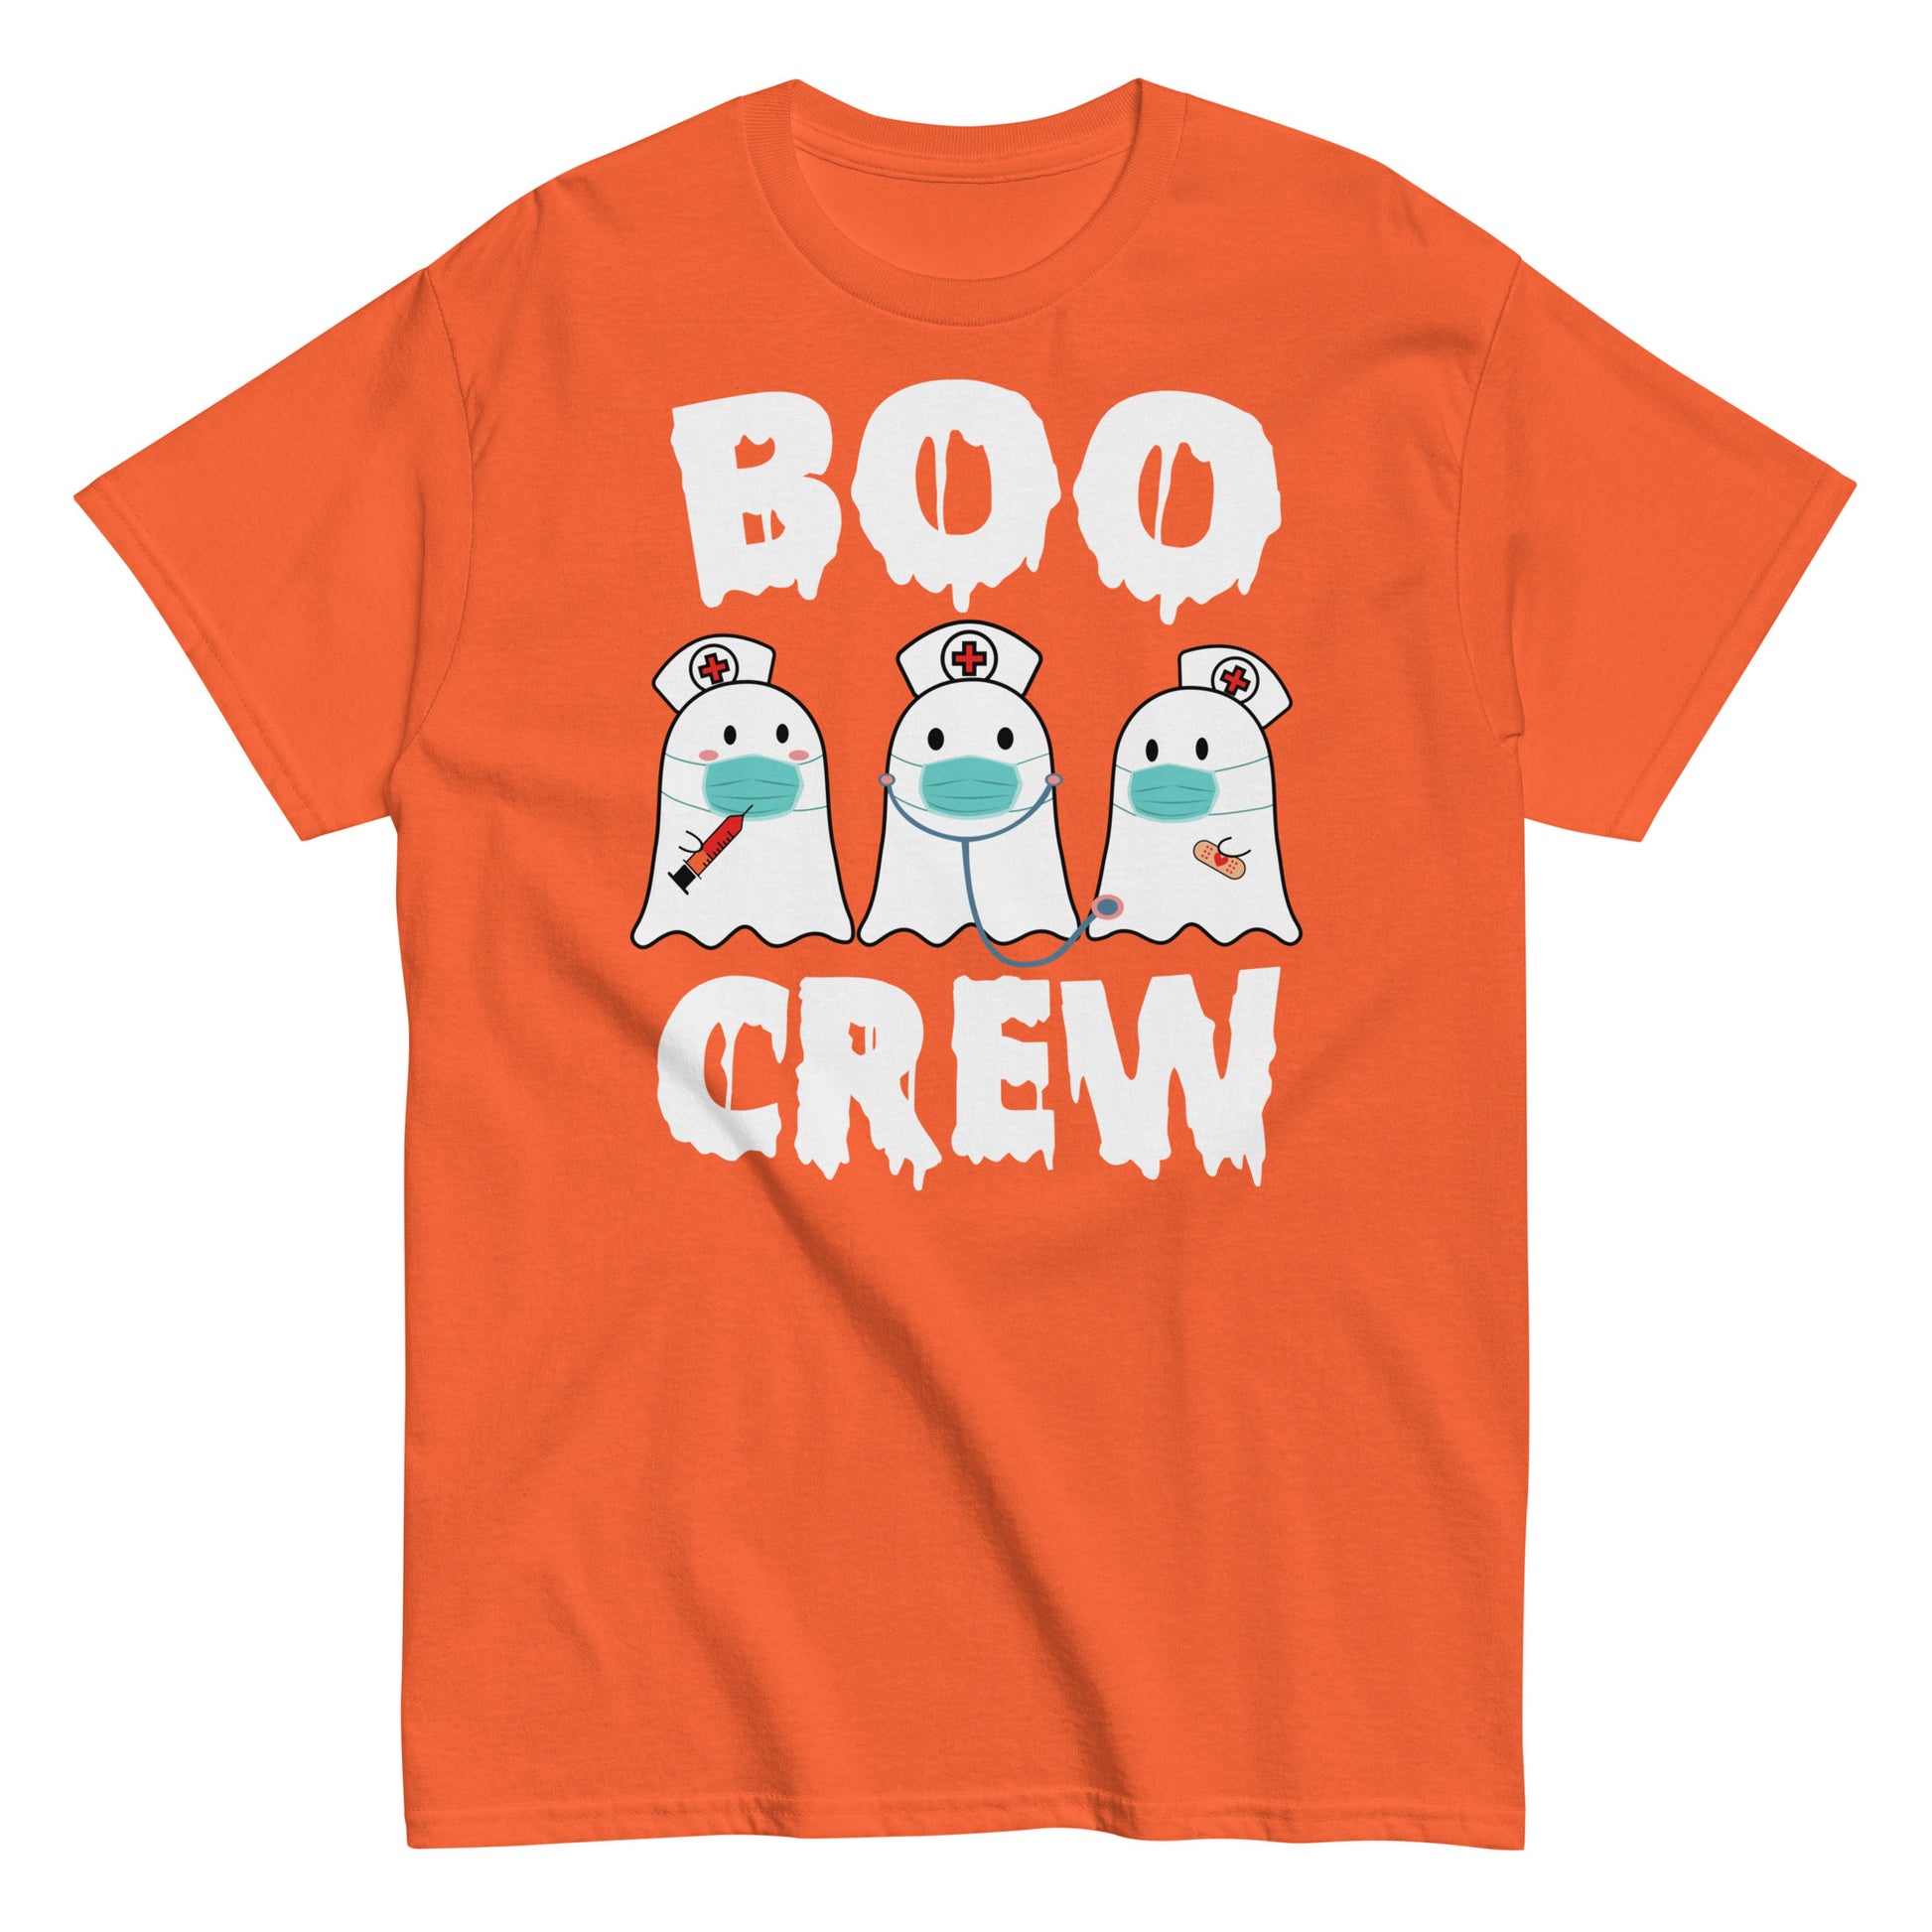 Ghostly Medical Charm: 'Boo Crew Nurse' Soft Tee